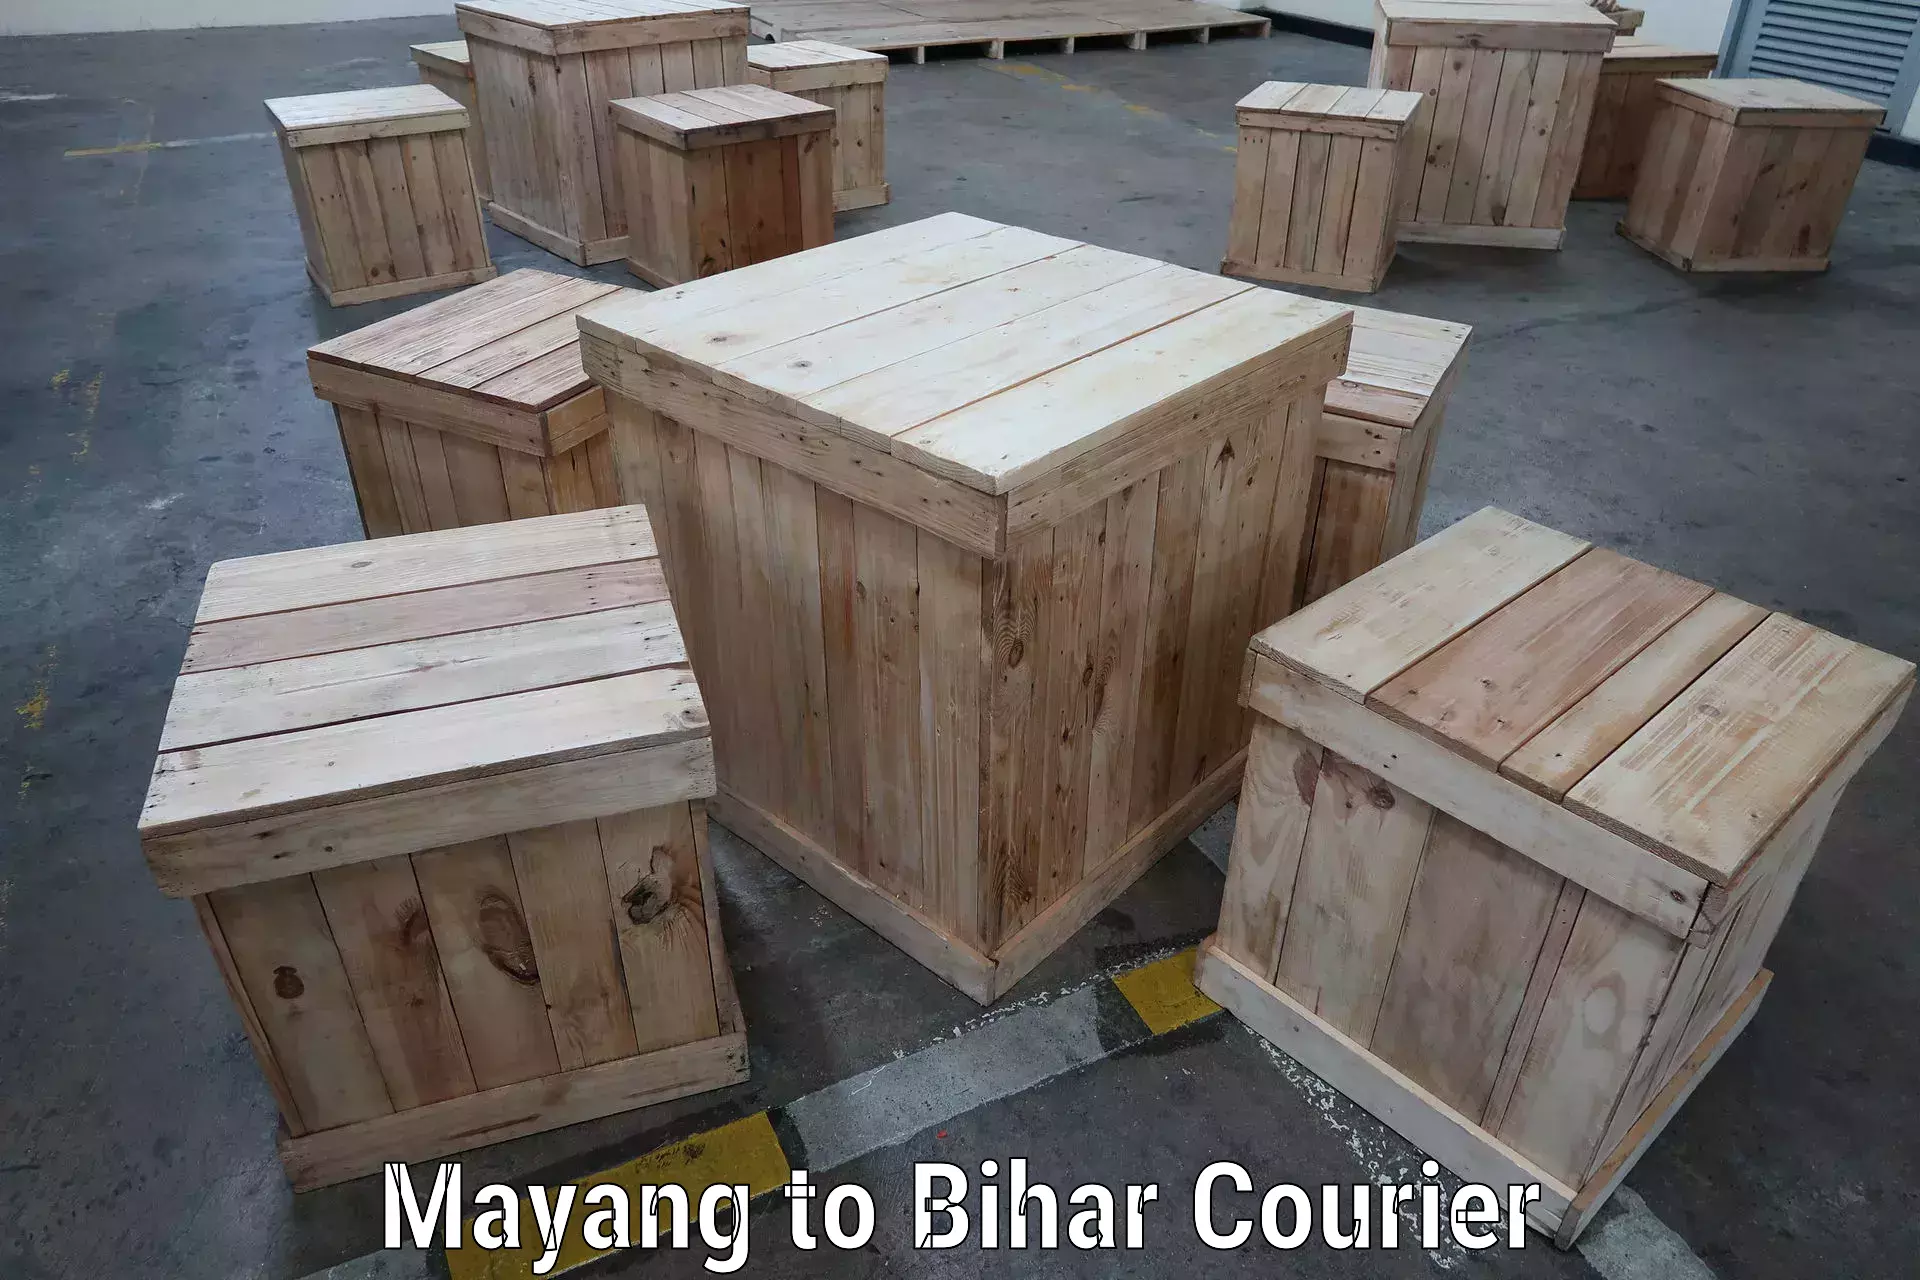 Professional courier handling Mayang to Bihar